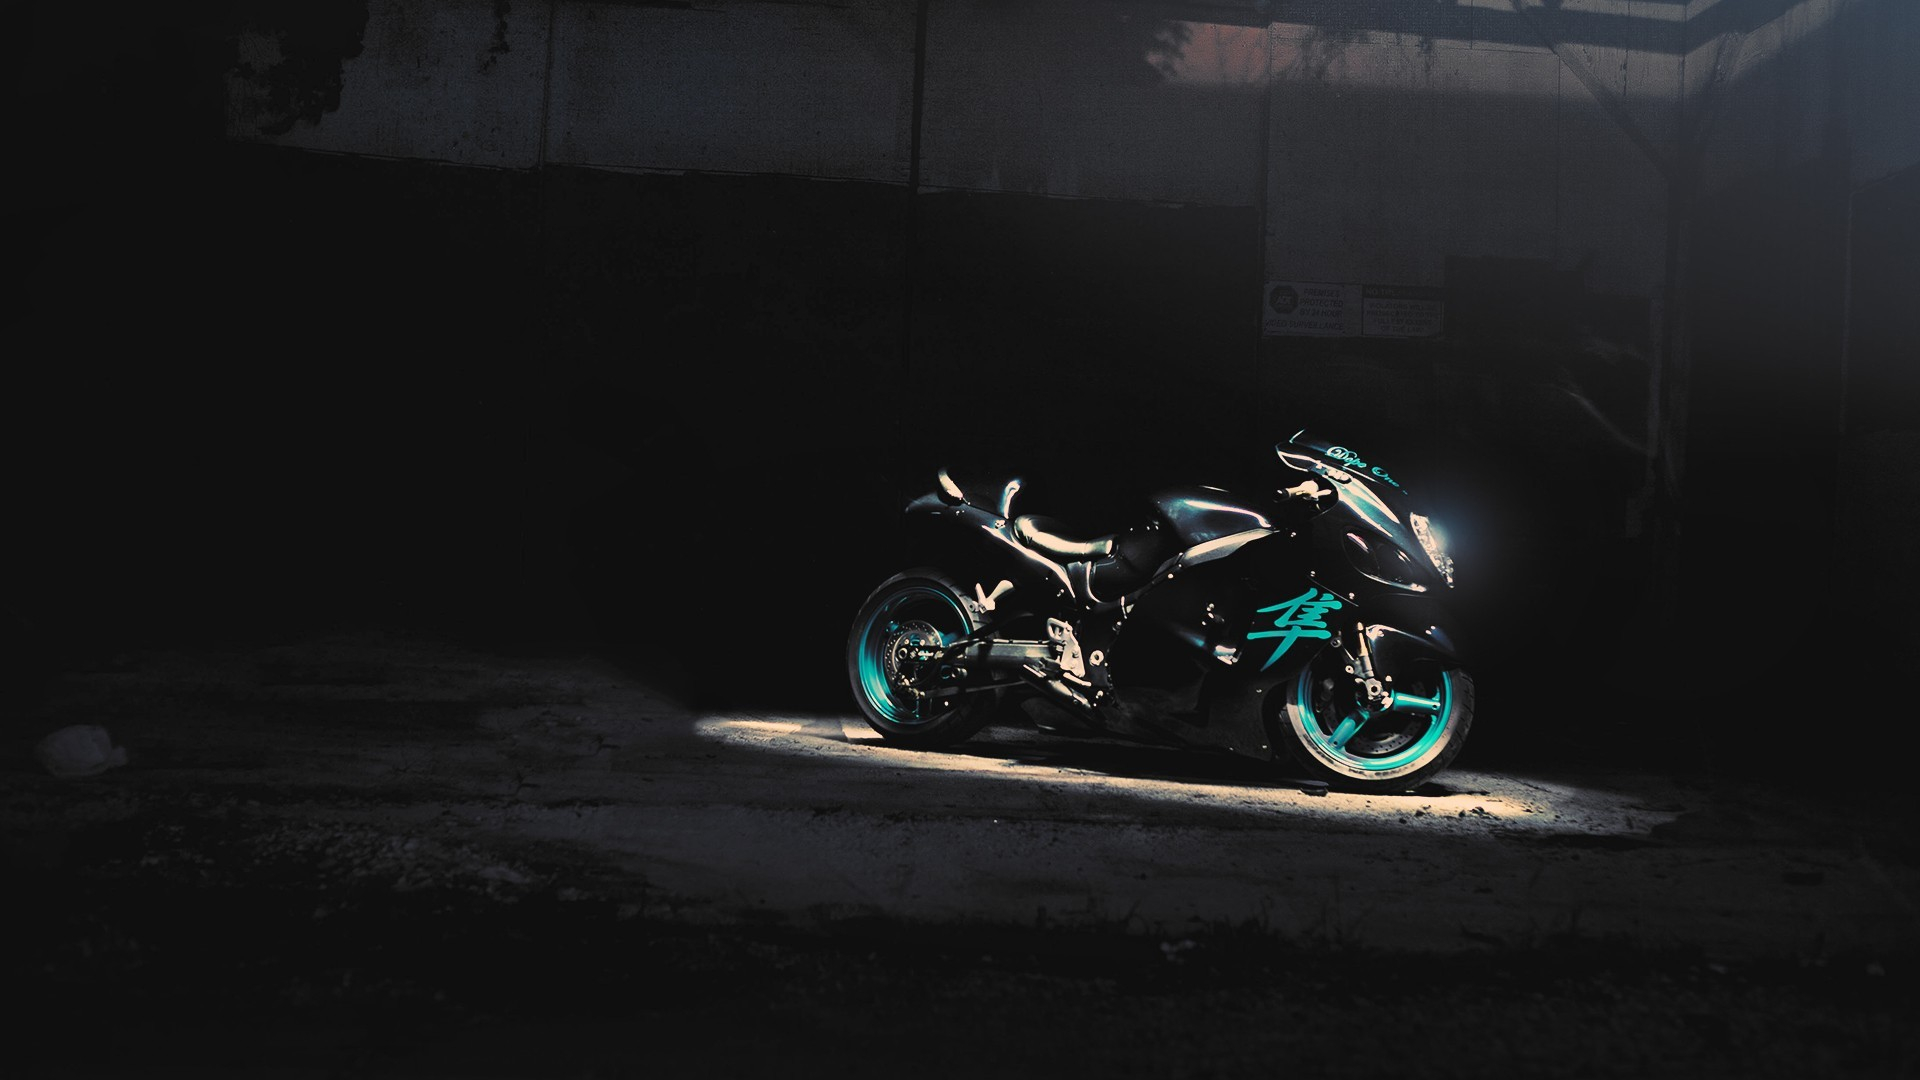 1920x1080 Wallpaper : black, night, motorcycle, vehicle, blue, superbike, Suzuki, Hayabusa, light, darkness, screenshot, px, computer wallpaper goodfon 542334 HD Wallpapers